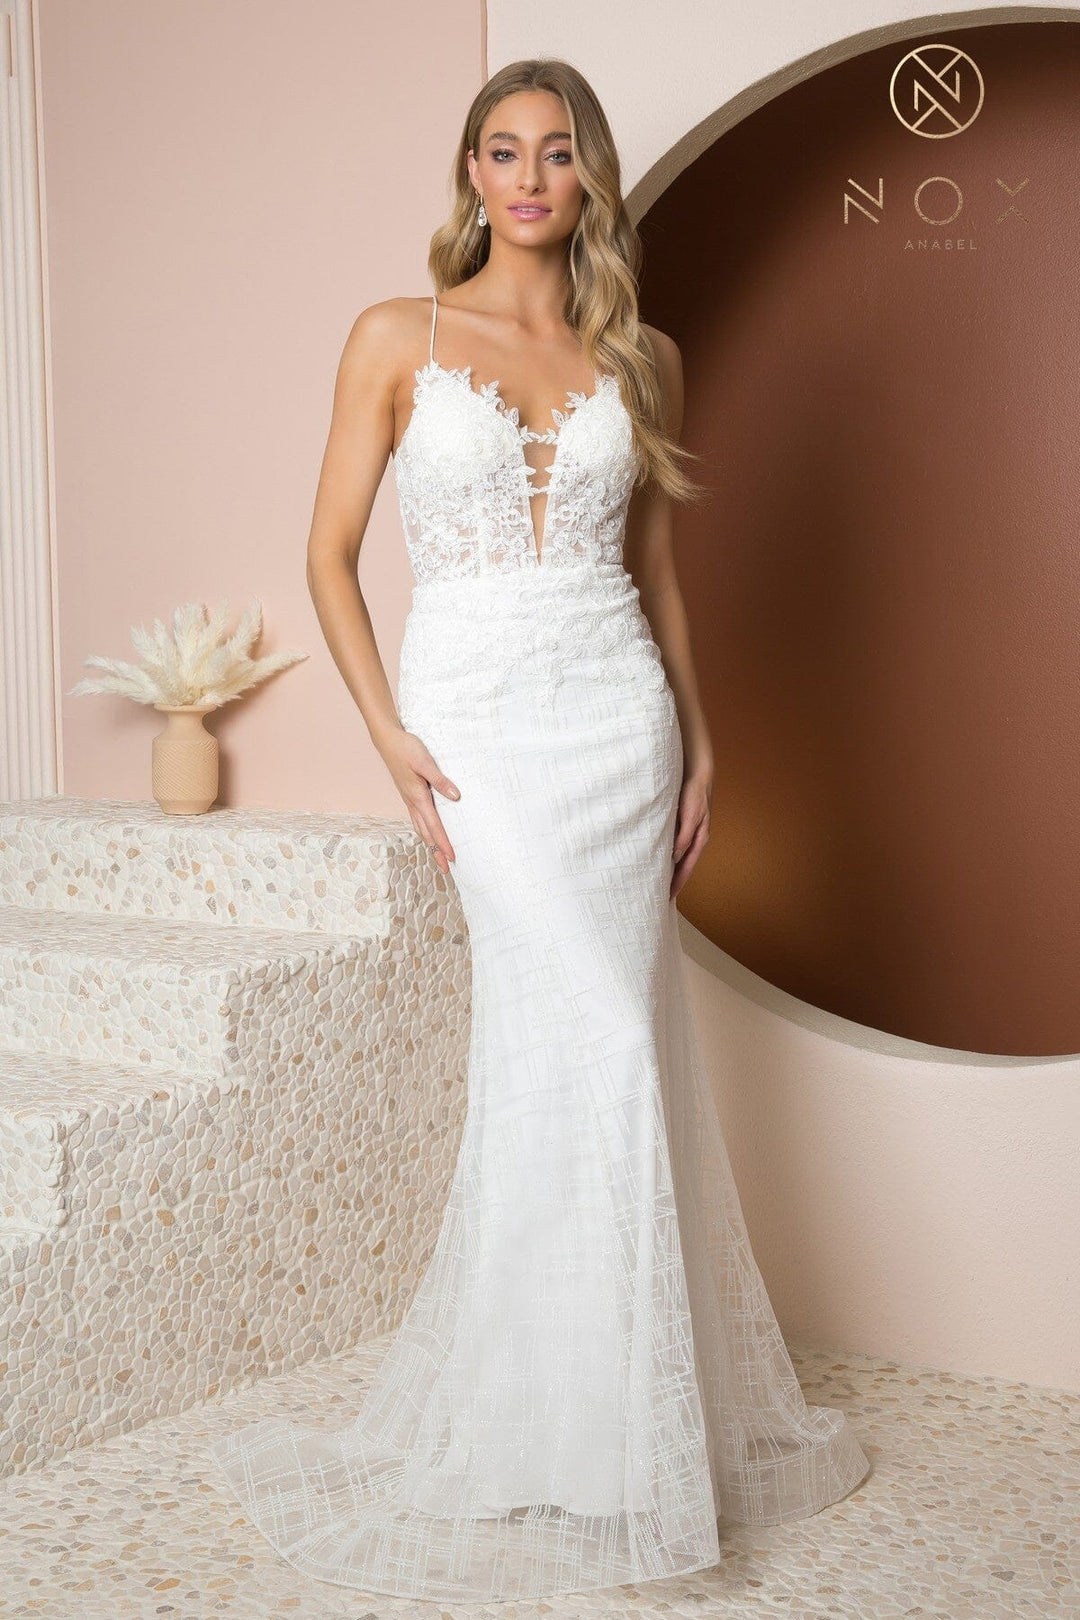 White Fitted Glitter Print Mermaid Dress by Nox Anabel R282-1W